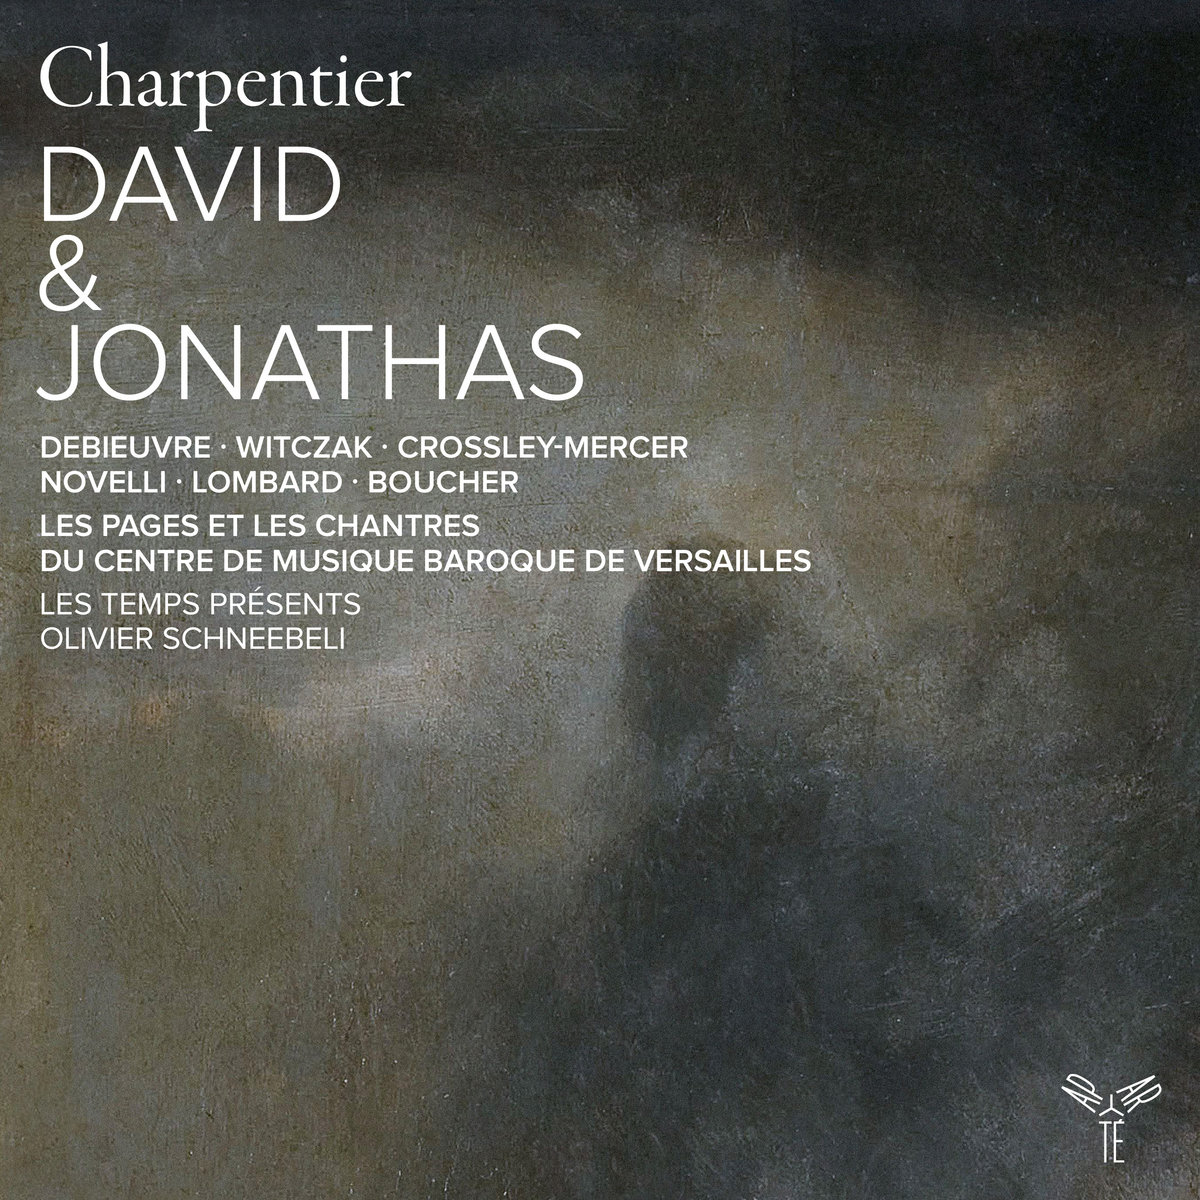 Charpentier – David et Jonathas Boucher Debieuvre Witczak Schneebeli